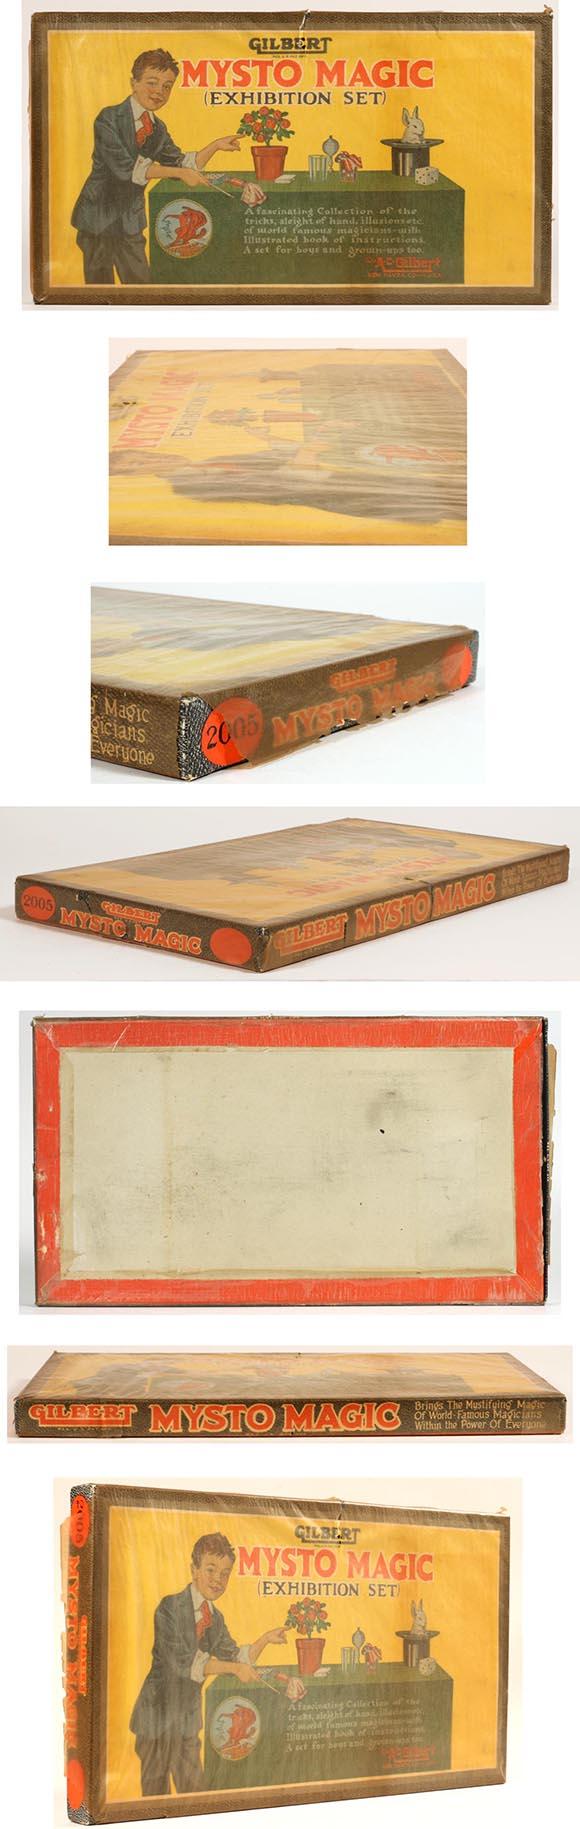 1930 Gilbert Mysto Magic Exhibition Set, Factory Sealed